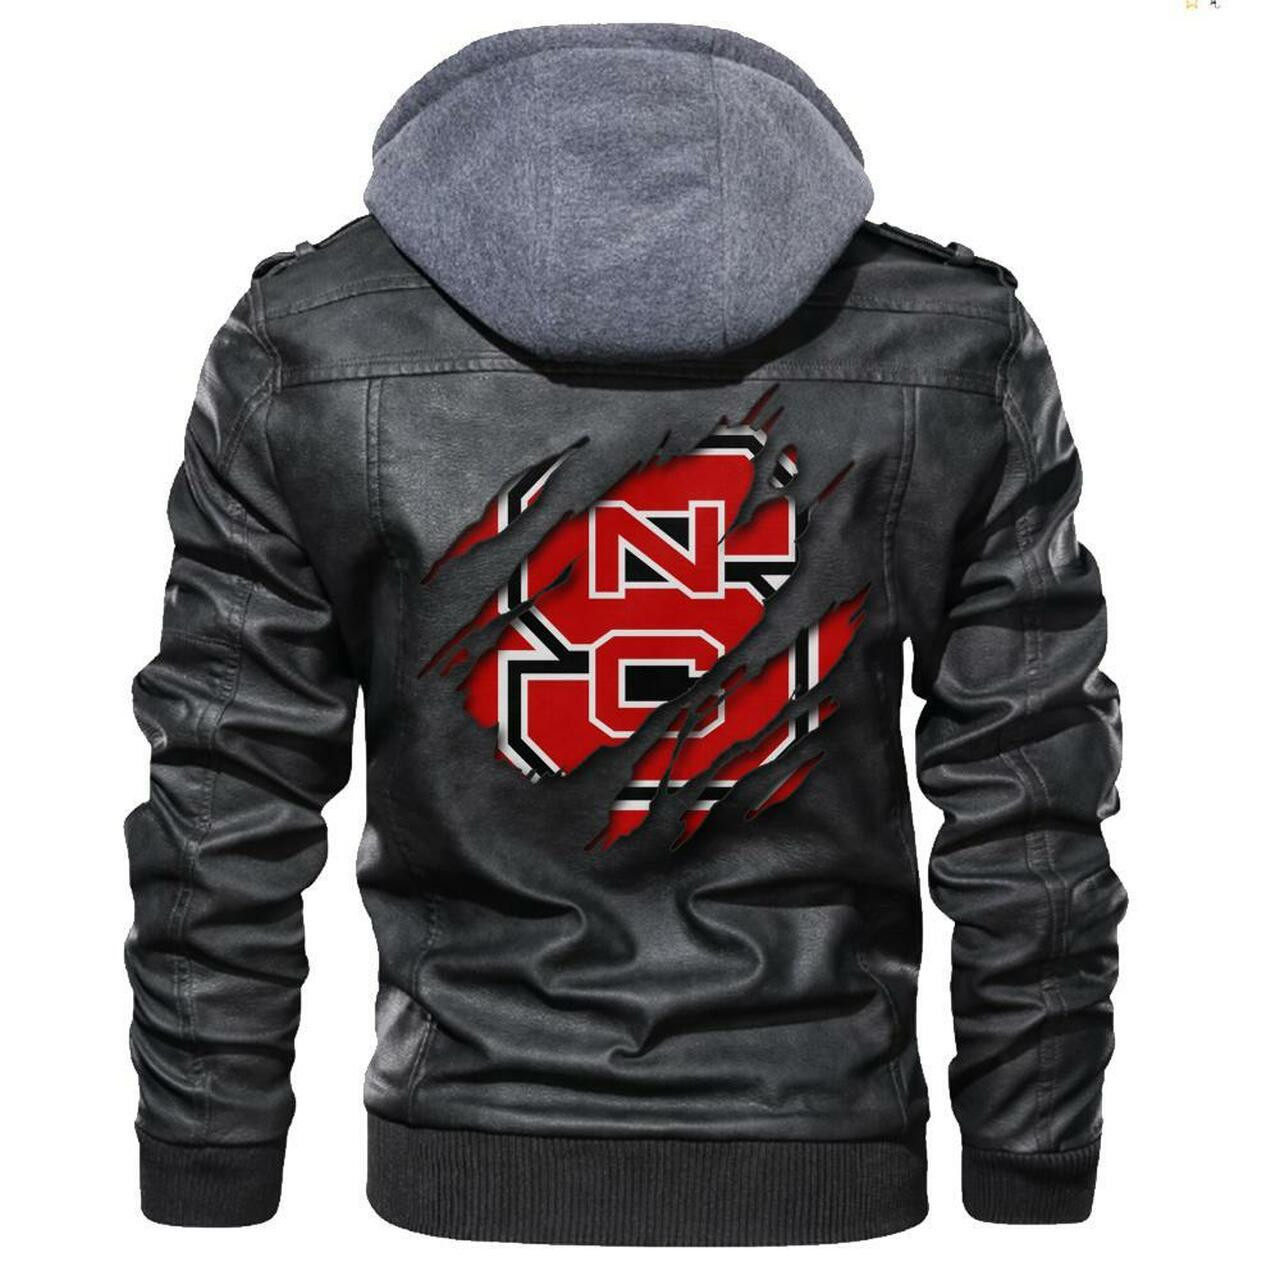 Top leather jacket Sells Best on Techcomshop 102